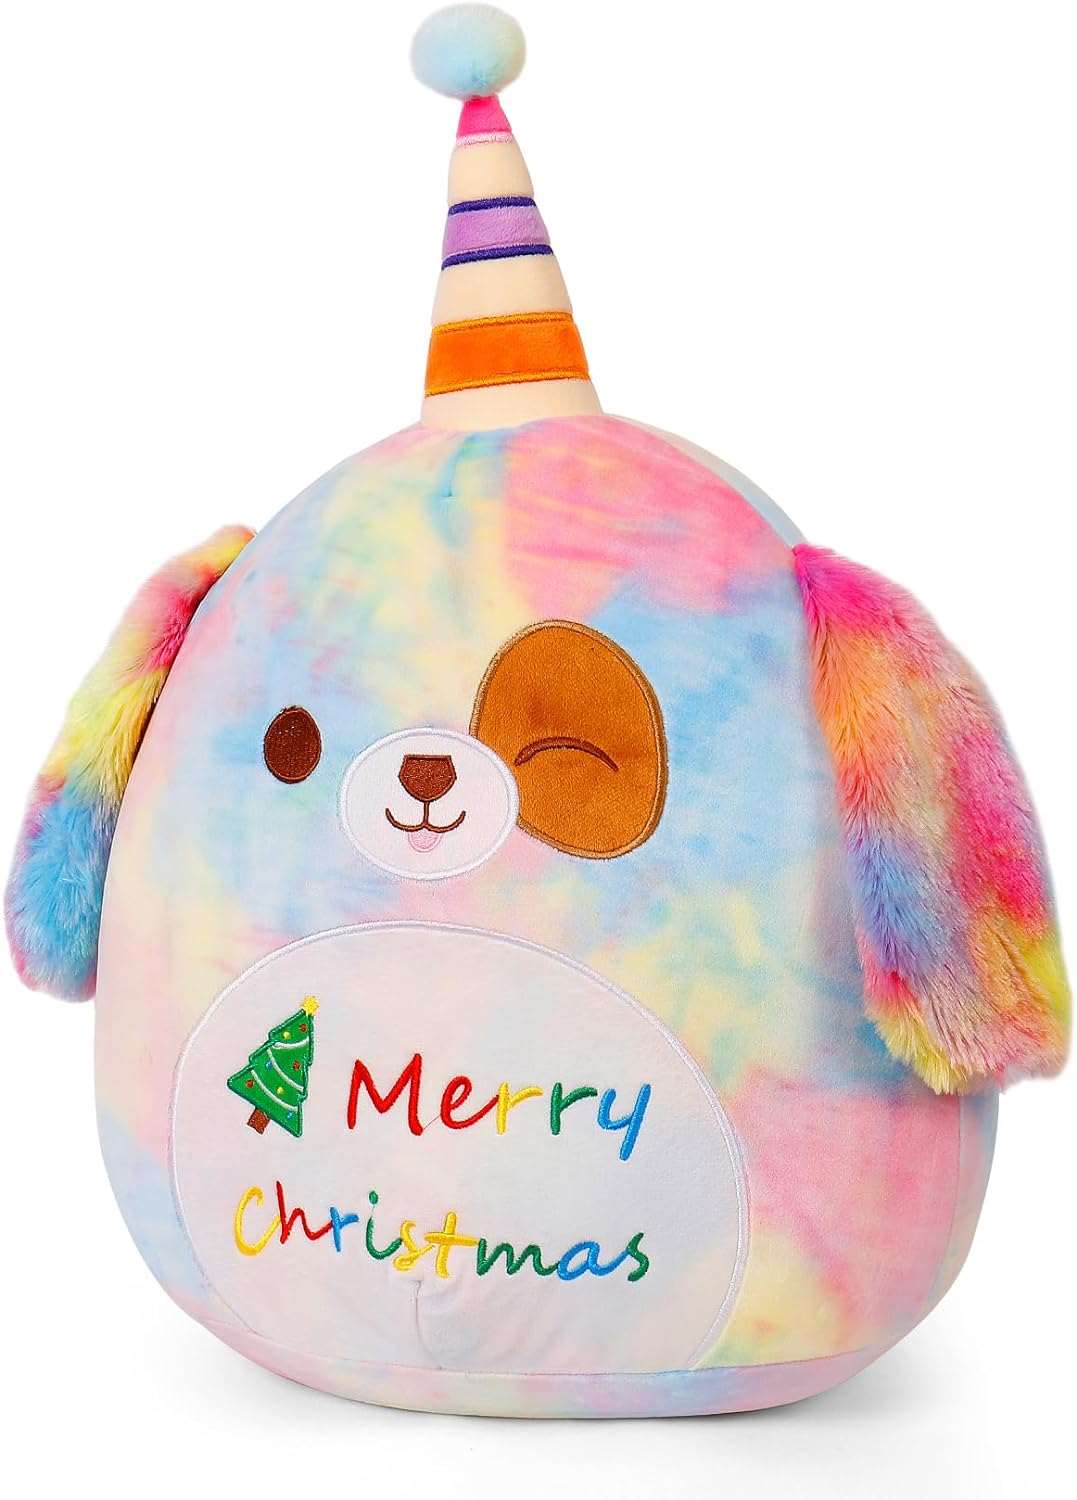 24 Inch Christmas Plush Toy Axolotl Stuffed Animal Merry Christmas Soft Plush Pillow - Cykapu